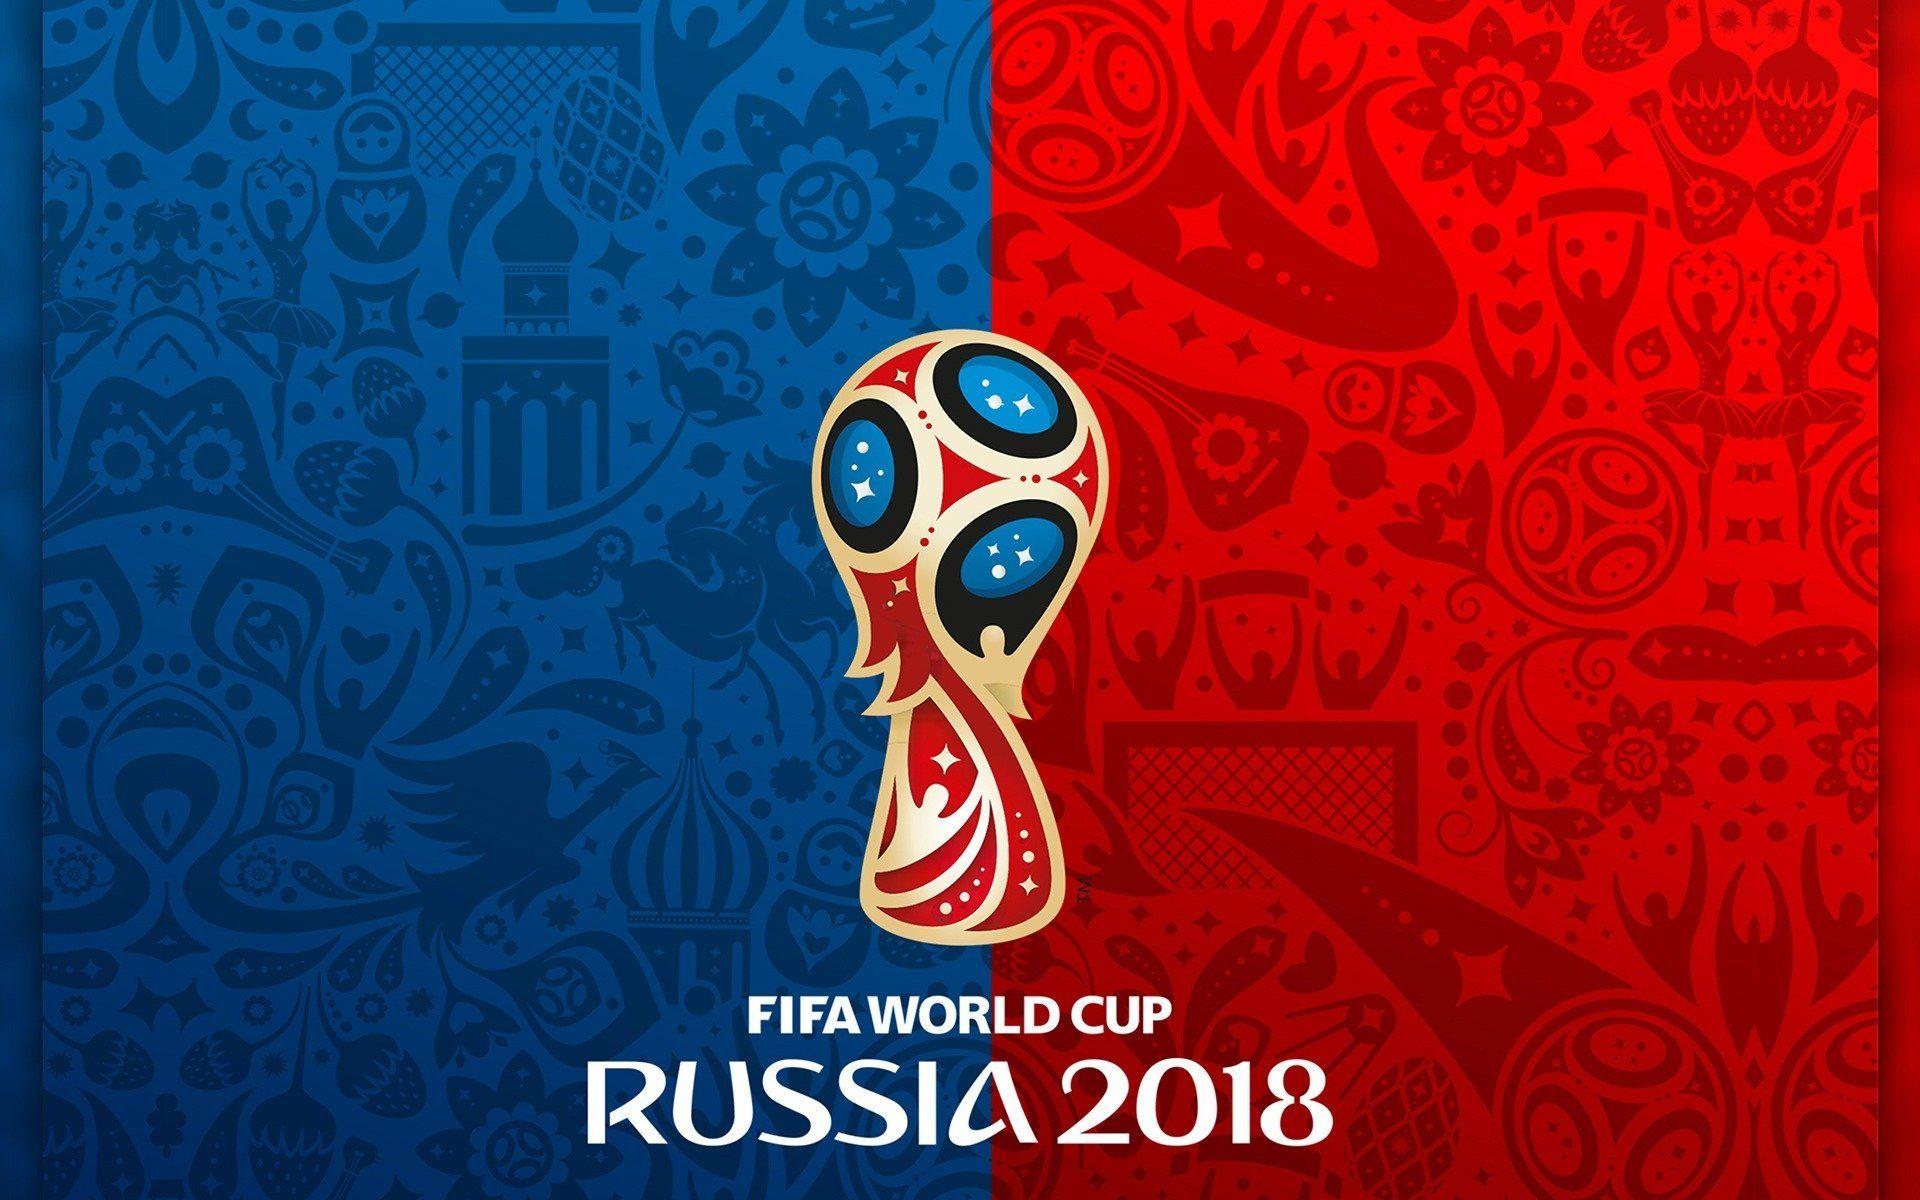 Worldcup In Hands iPhone Wallpapers Free Download